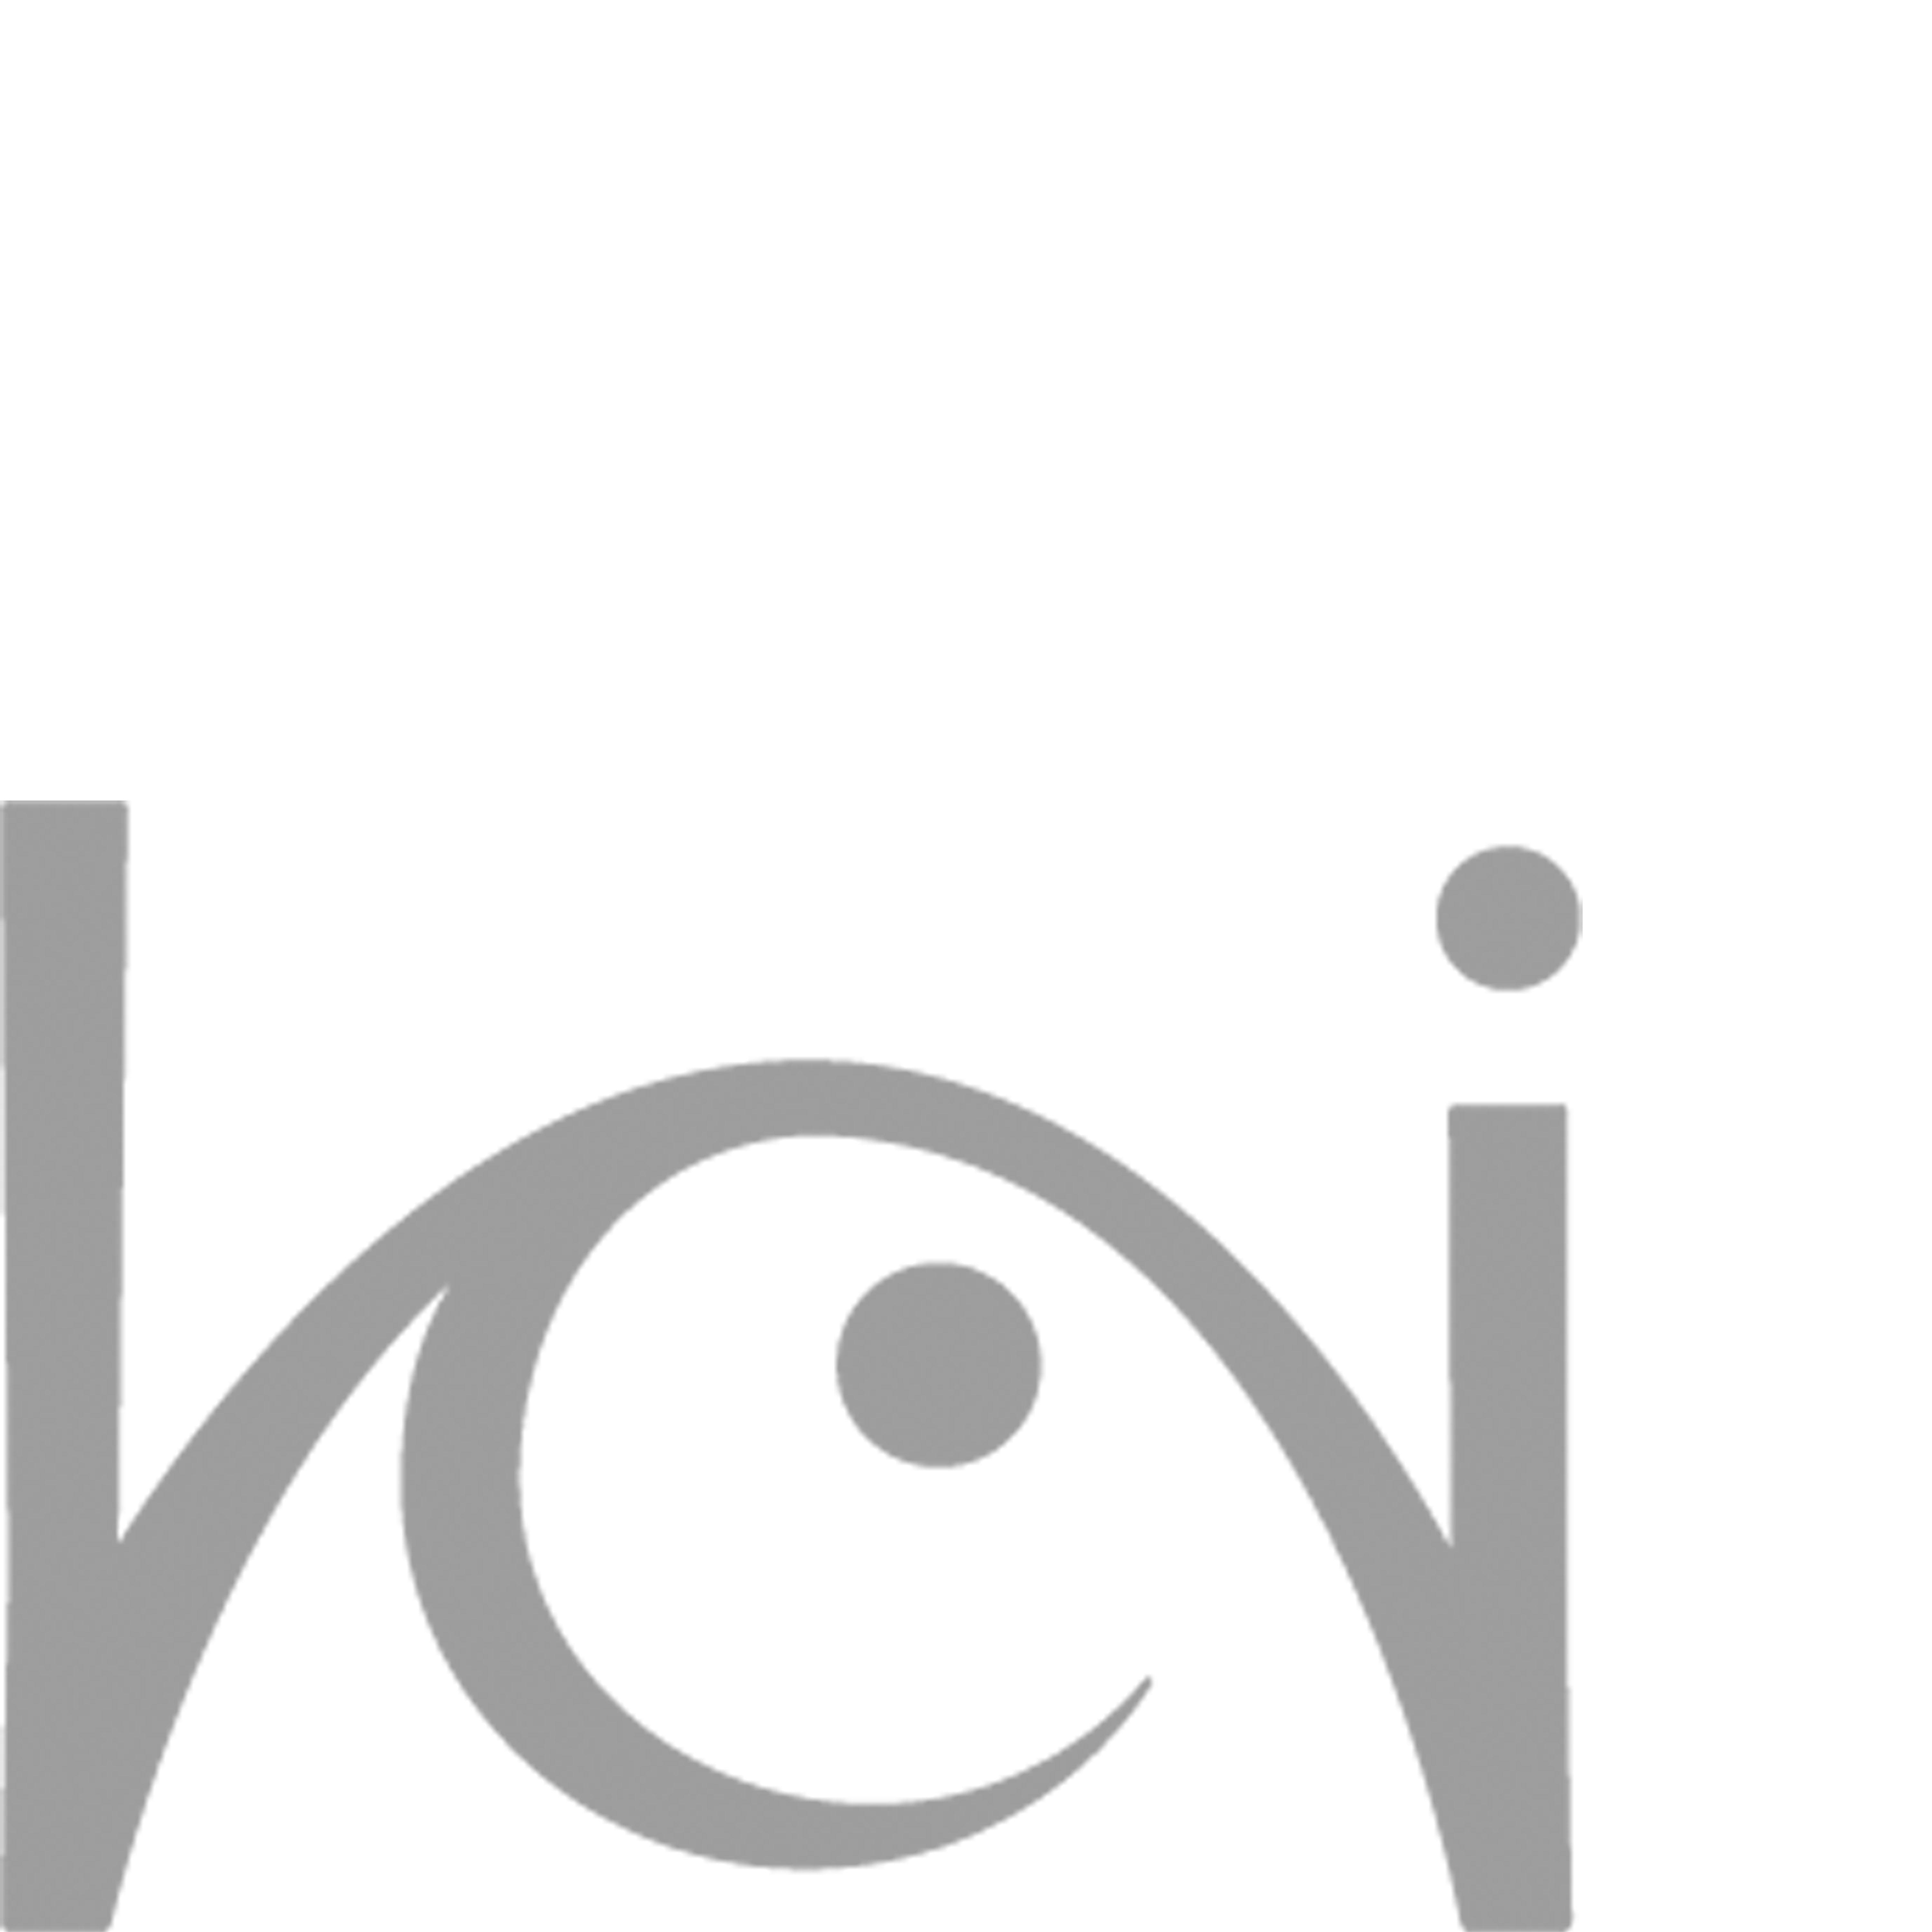 HCI Logo - Hci Watermark Logo